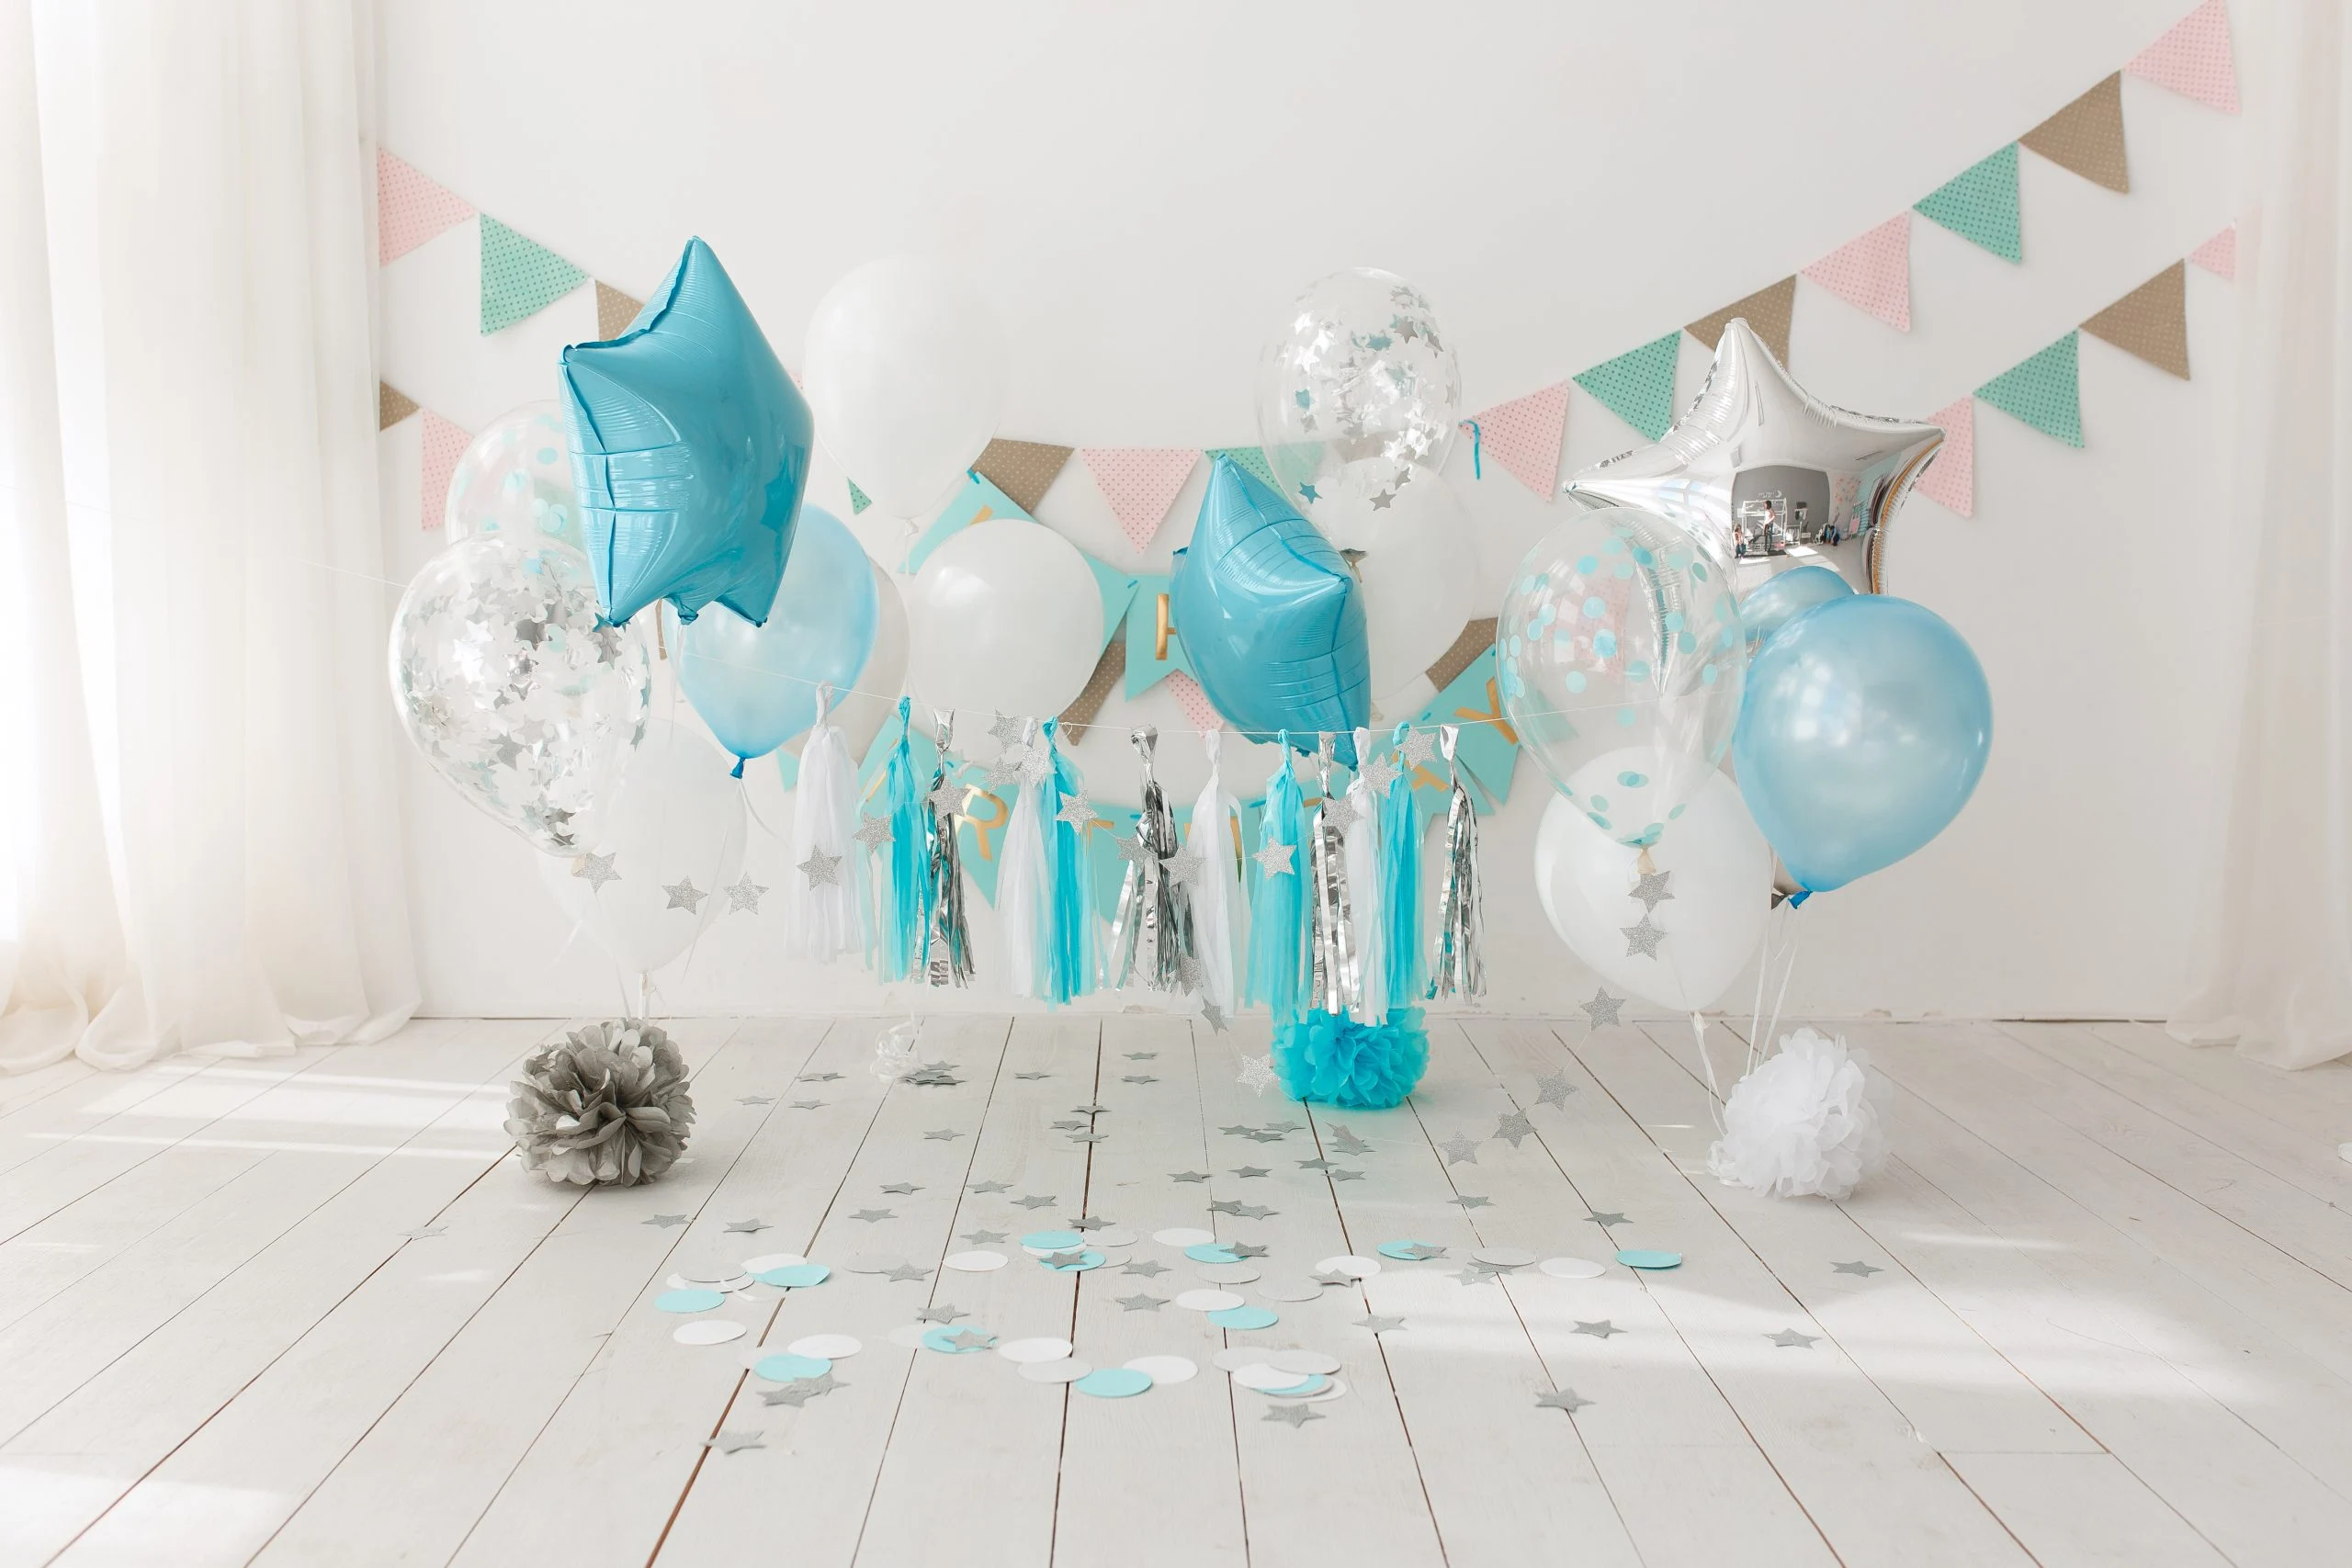 Curso Monetiza tu pasión con la decoración con globos